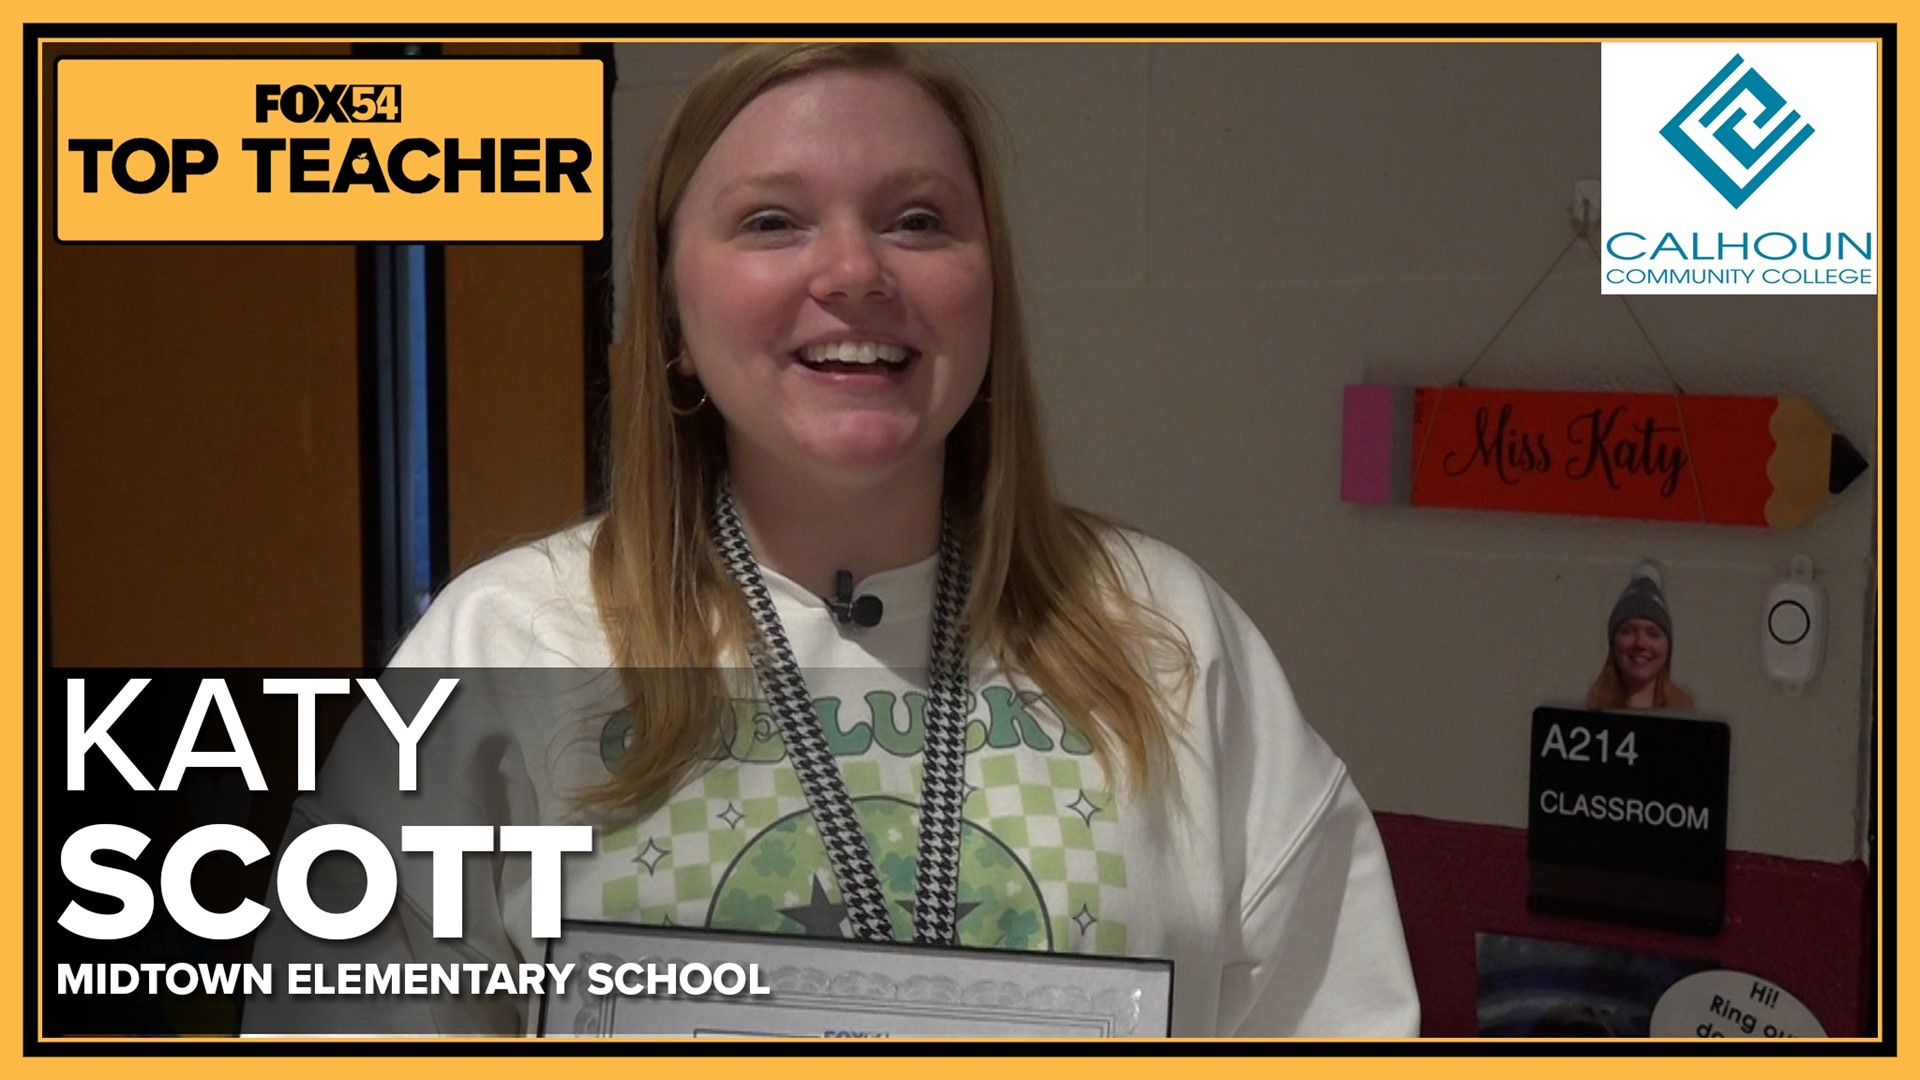 FOX54 Top Teacher Katy Scott teaches at Midtown Elementary in Madison, AL